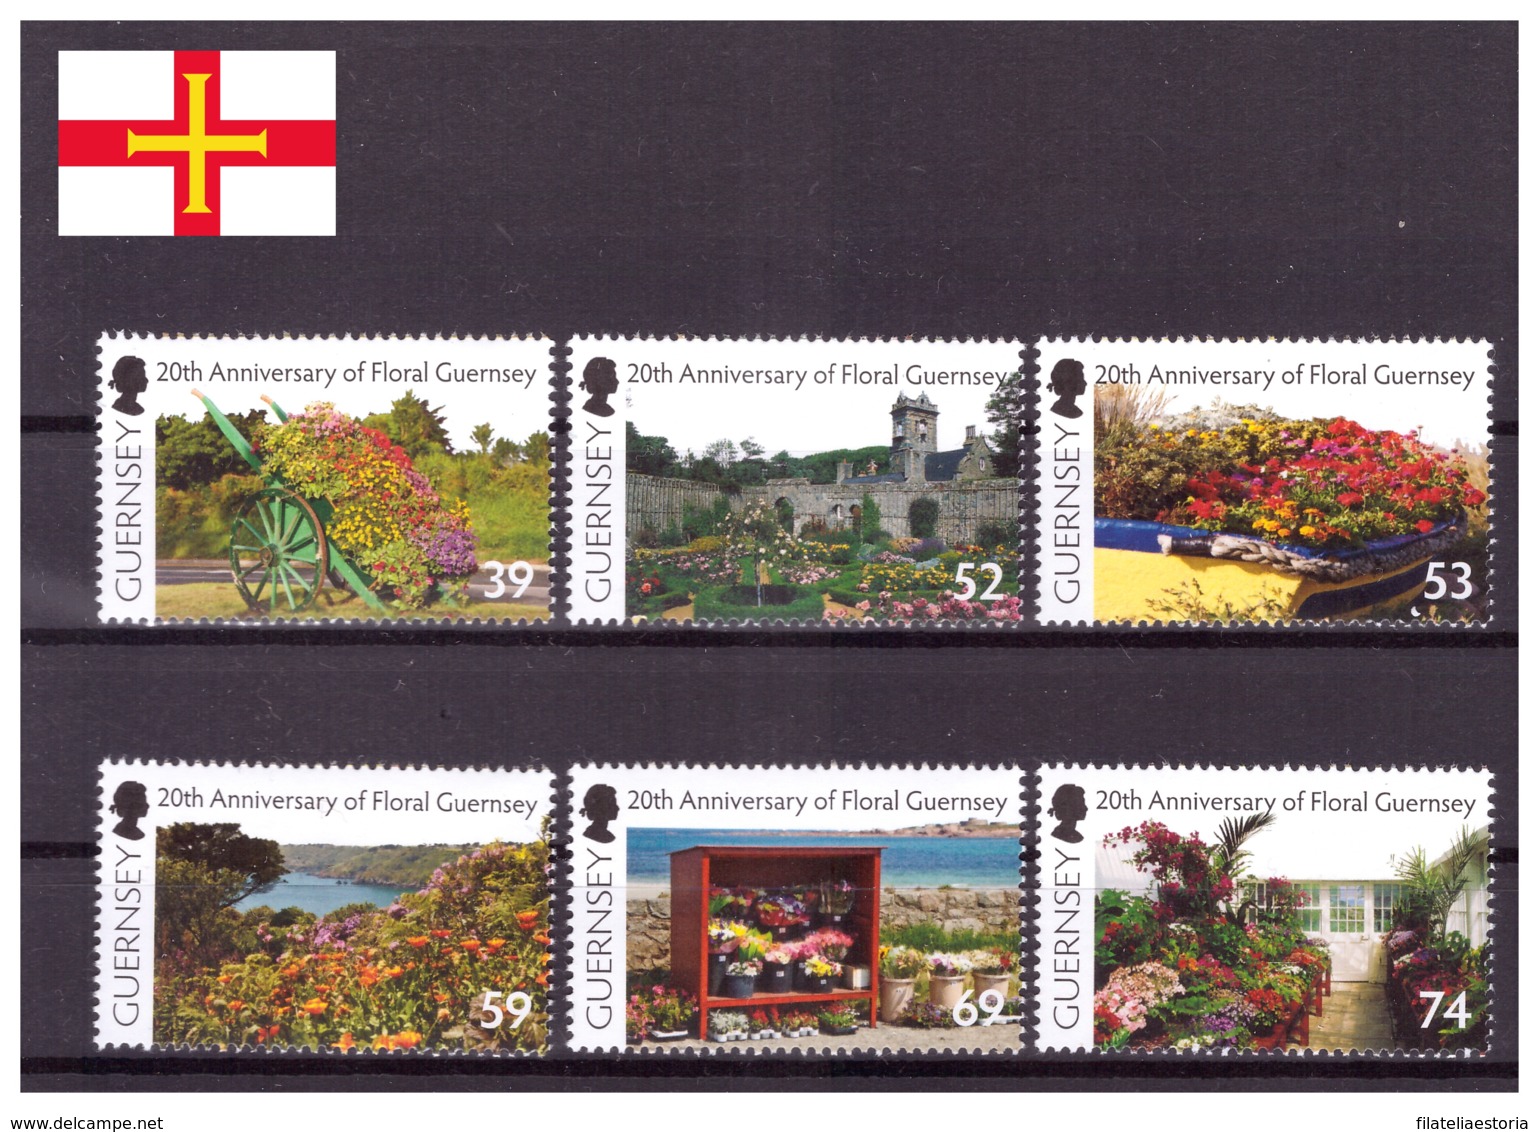 Guernsey 2012 - MNH ** - Fleurs - Michel Nr. 1394-1399 Série Complète (gbg278) - Guernesey